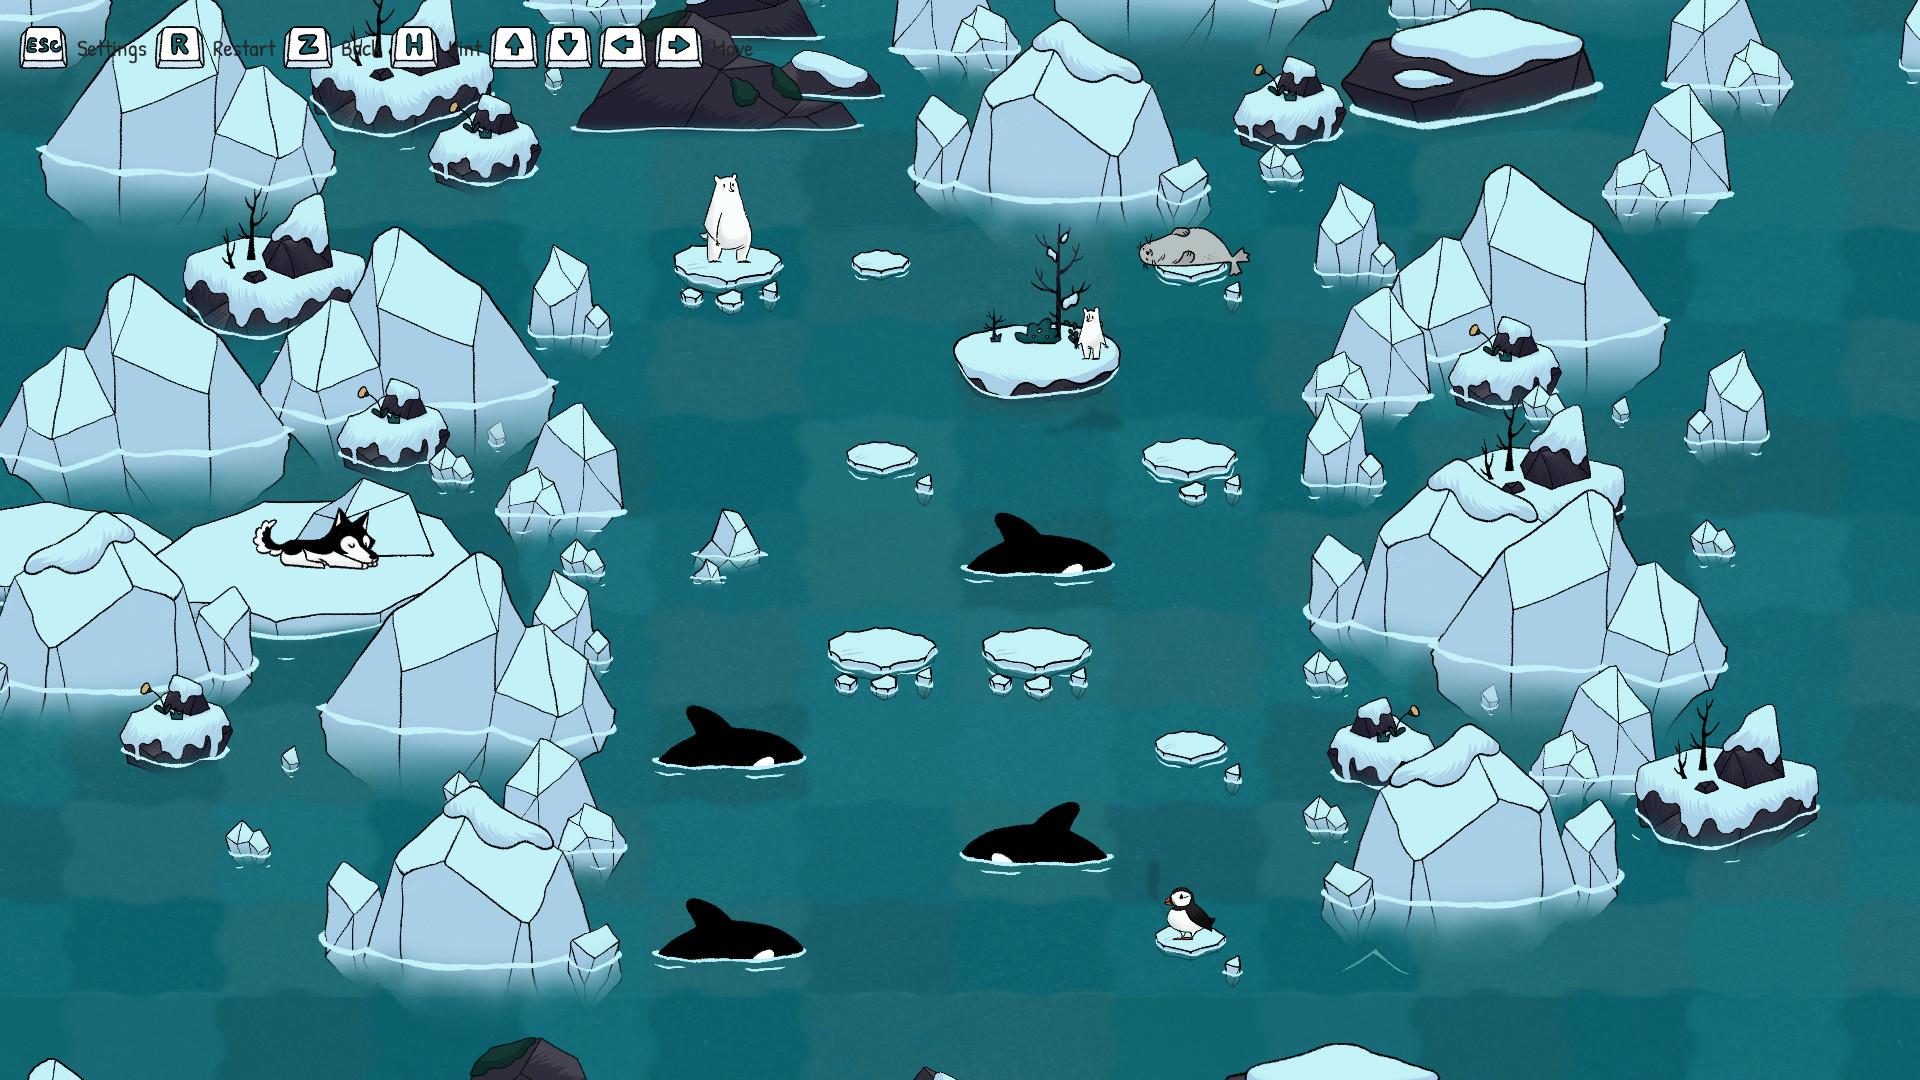 a polar bear sits on an ice floe with killer whales around it